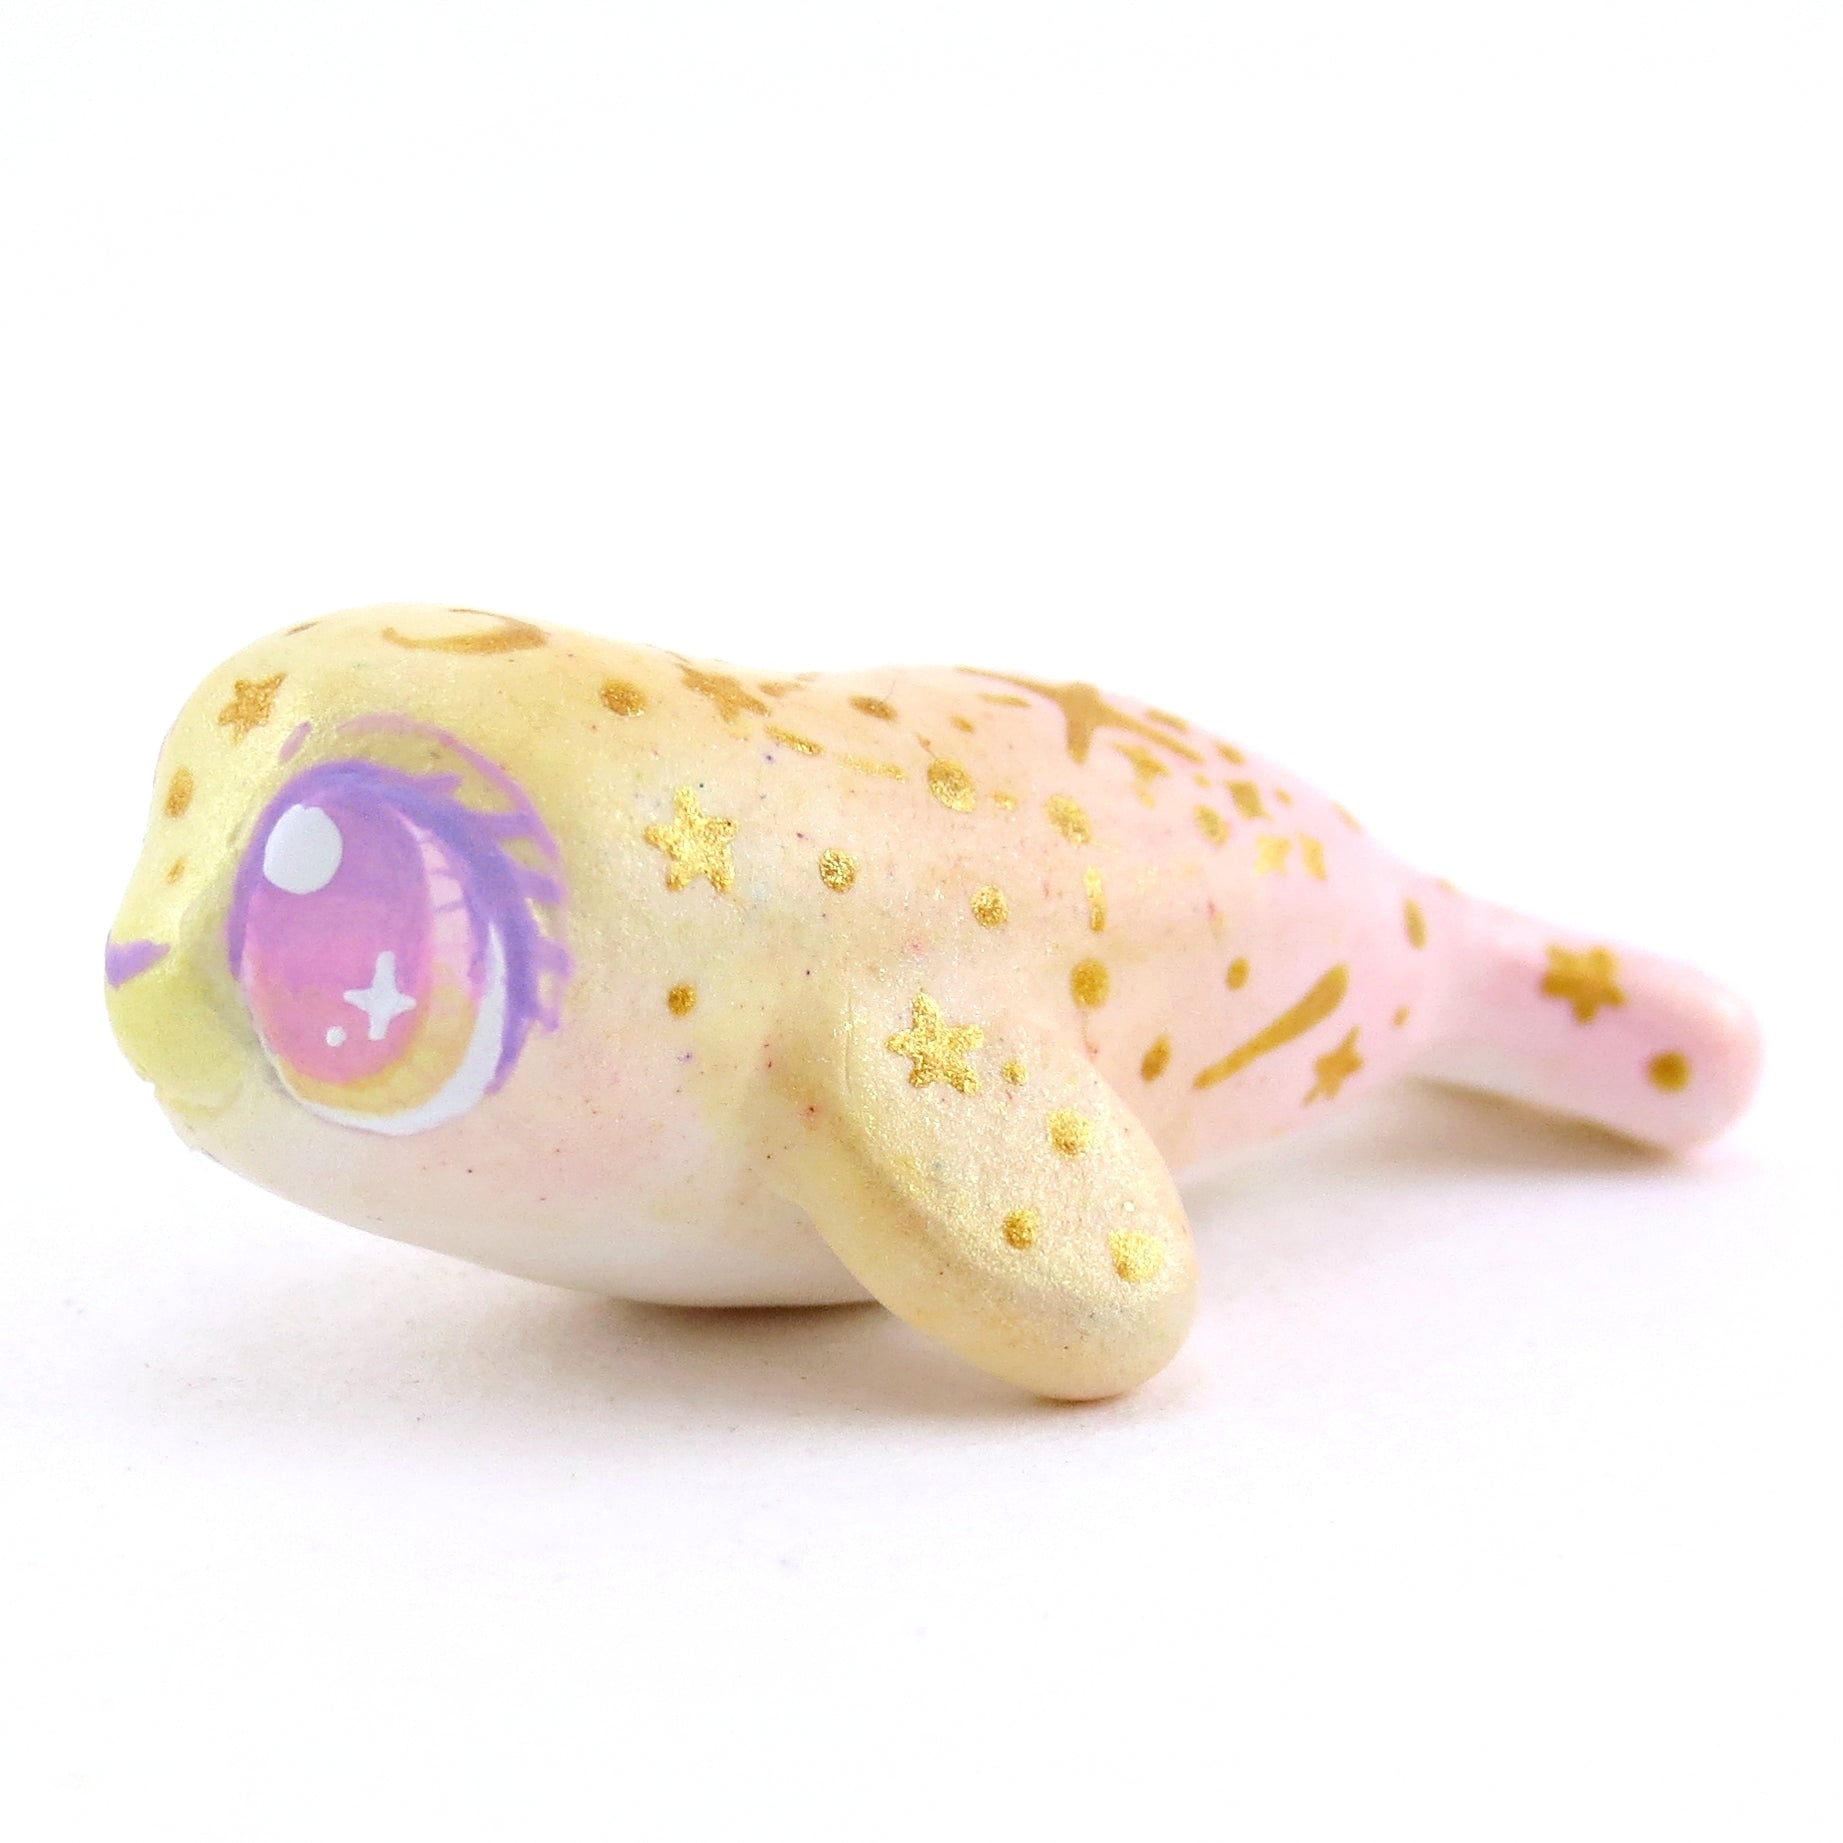 Peachy Constellation Ombre Seal Figurine - Polymer Clay Enchanted Ocean Animals